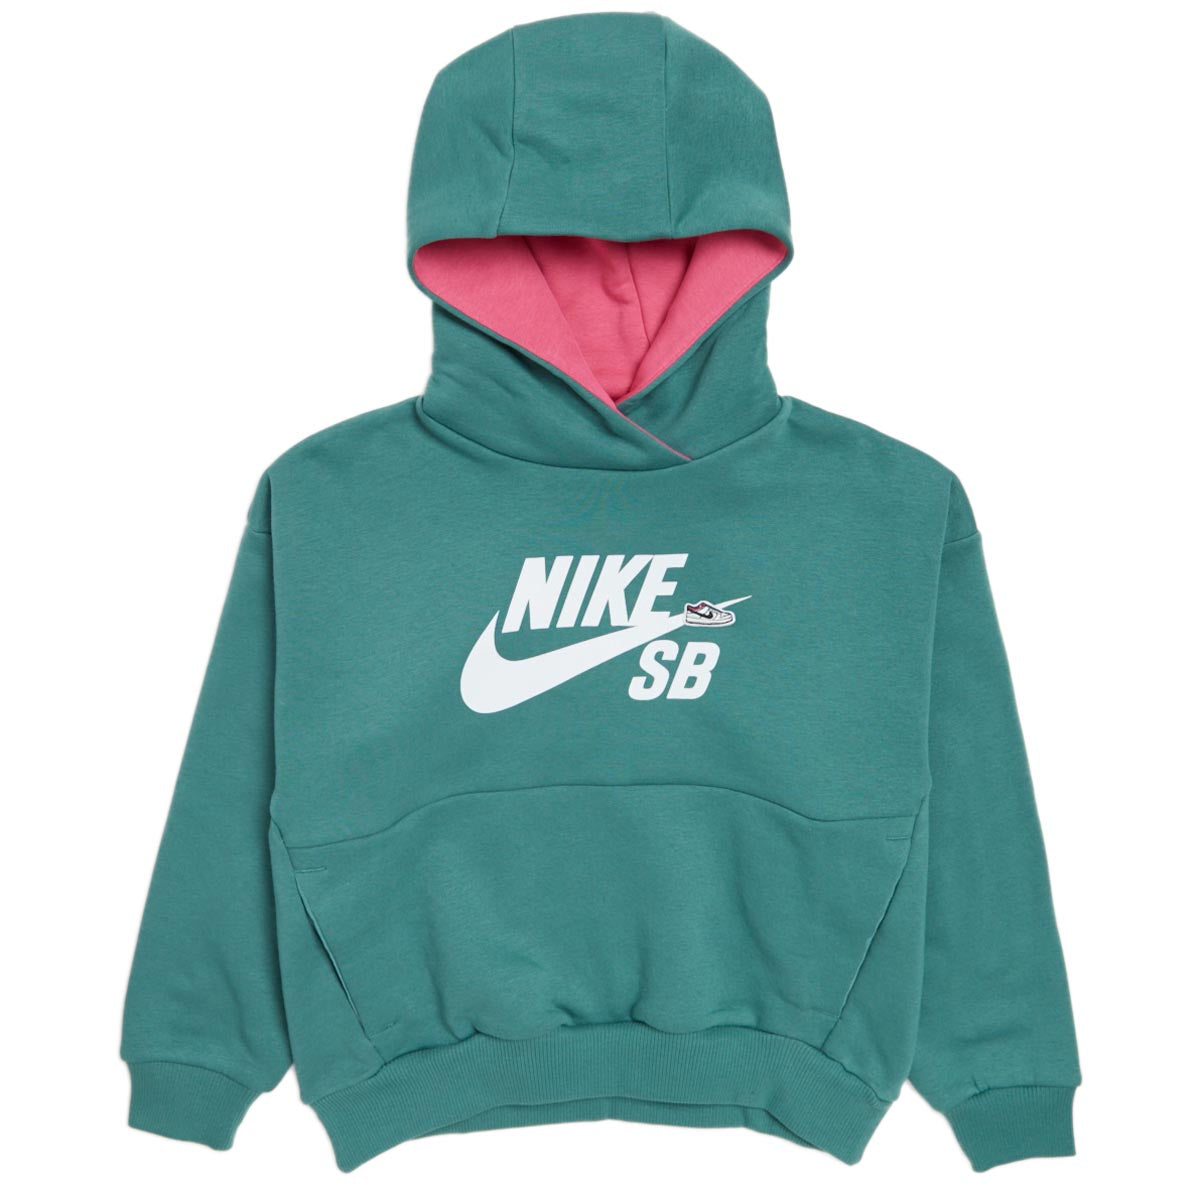 Nike SB Youth Icon Fleece Easy On Hoodie - Bicoastal/Alchemy Pink/White image 1